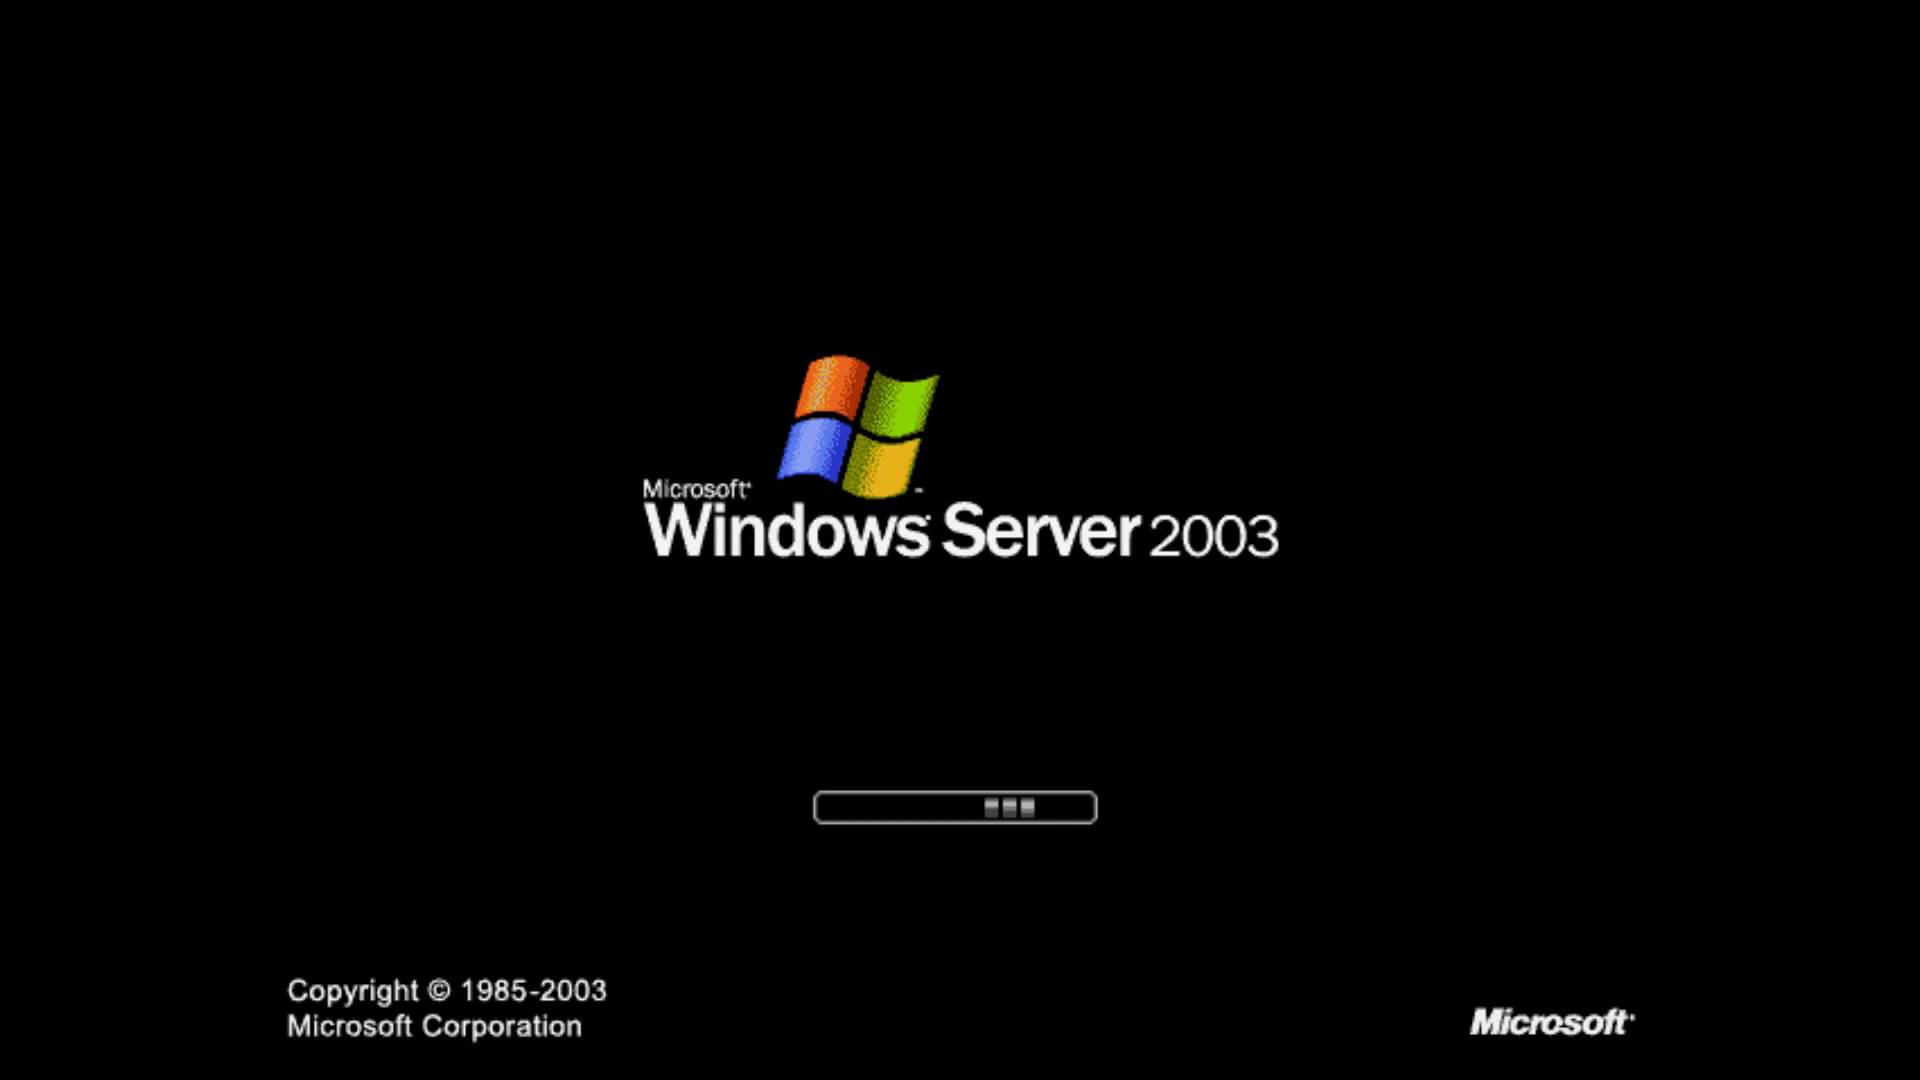 Windows Server 2003 USA Startup Sound